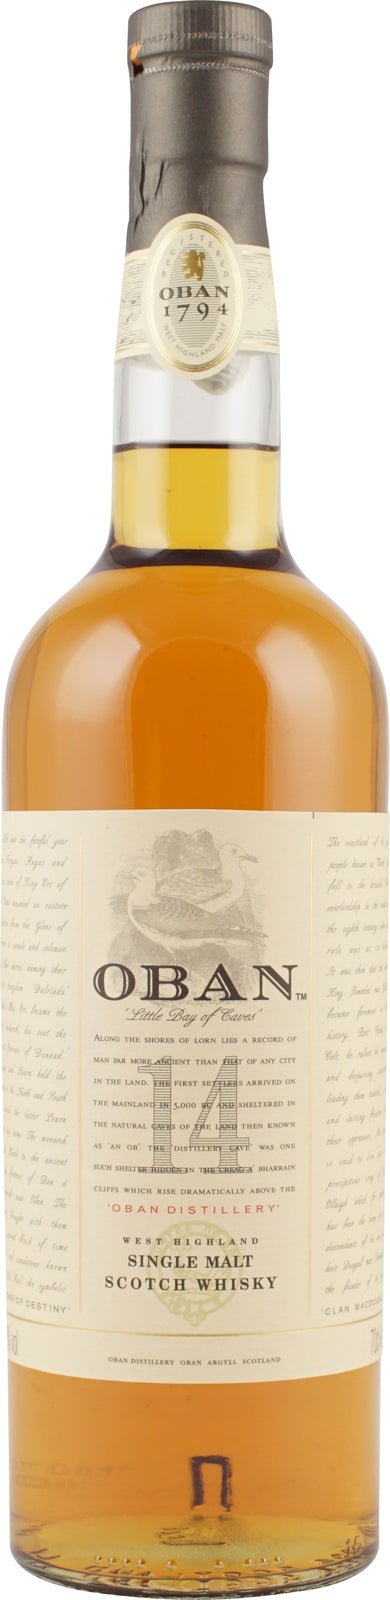 Oban Malt Whisky 14 Jahre 43% 0,7 ltr. - AllSpirits